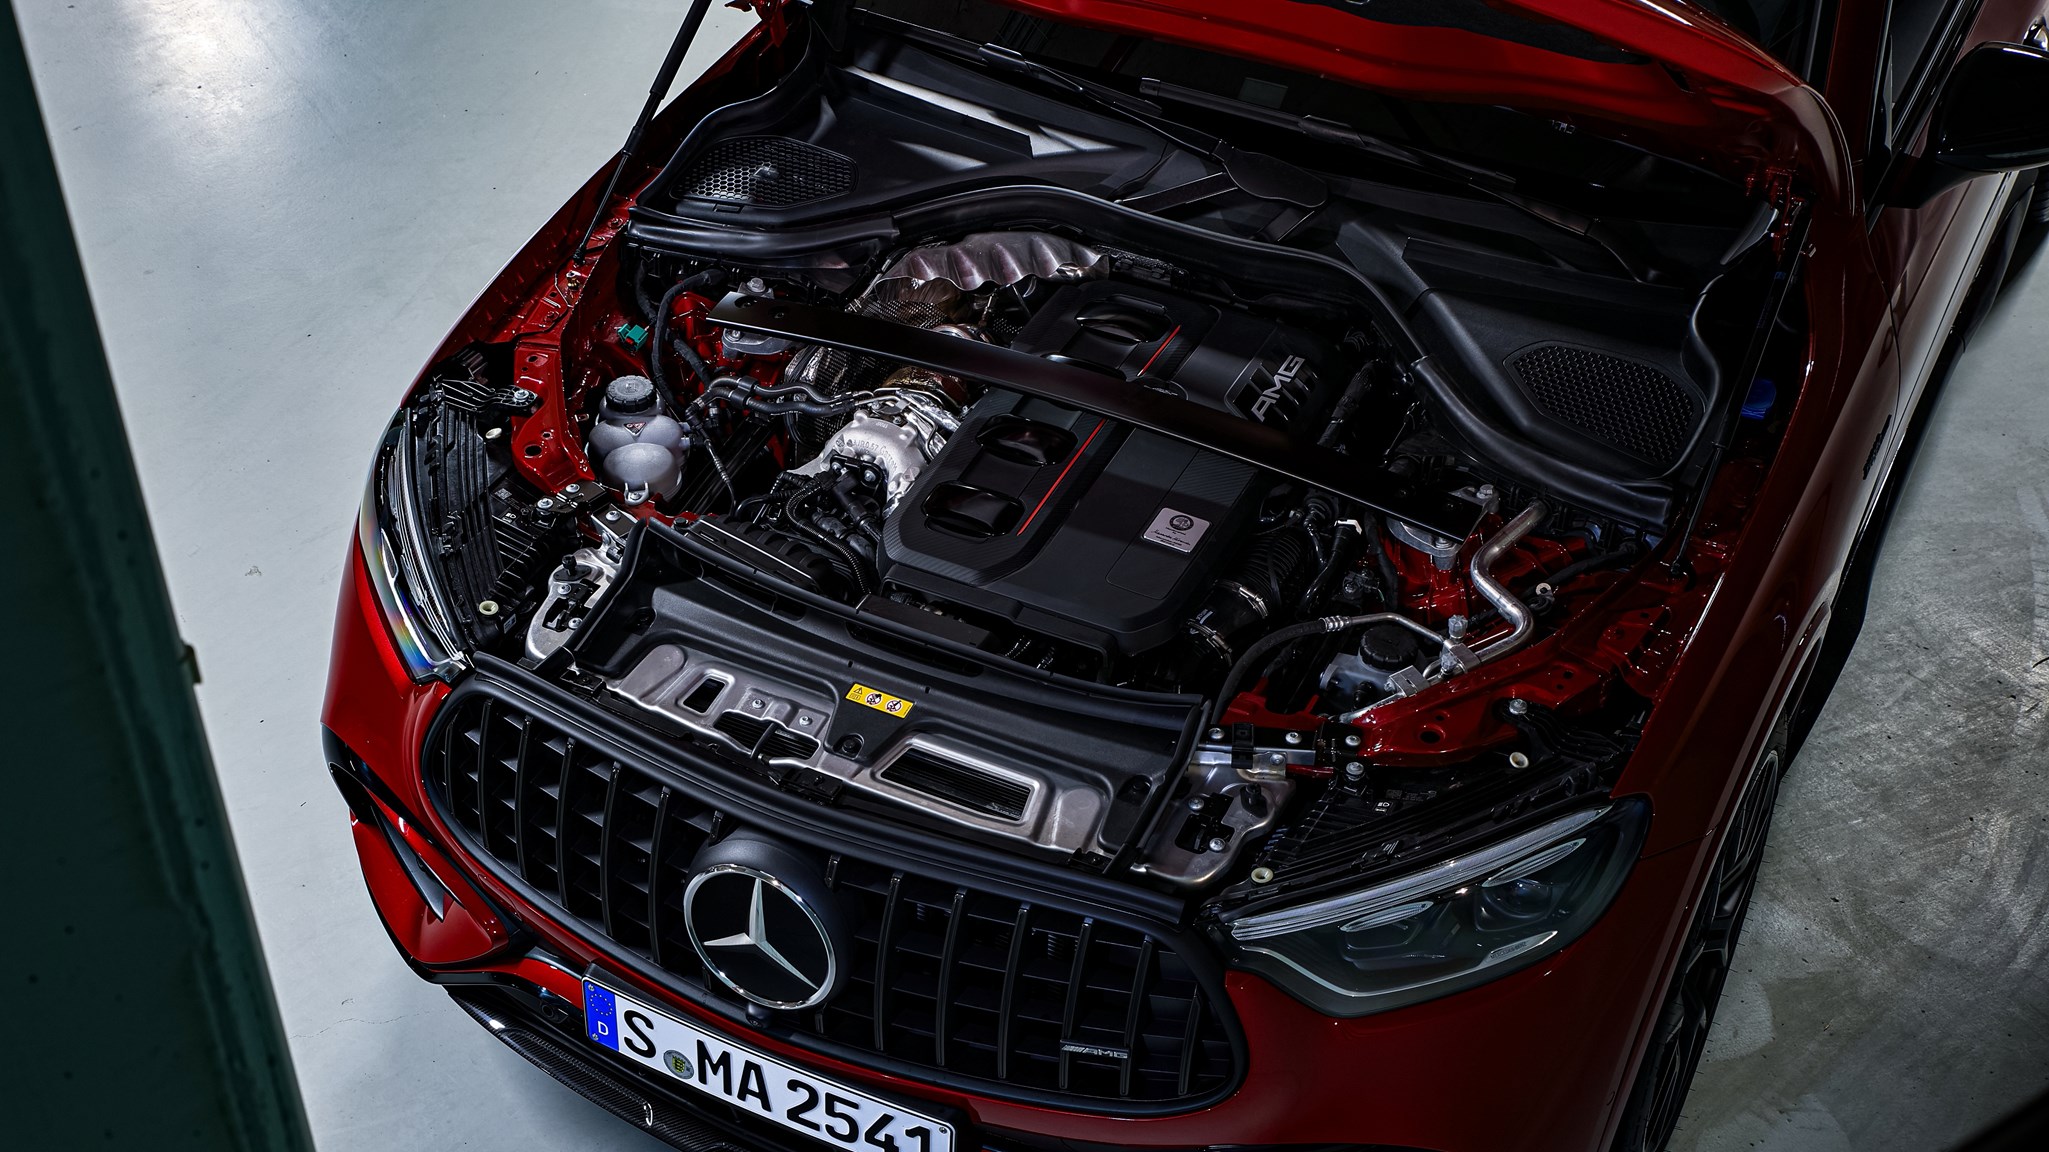 Mercedes-AMG GLC 63 S E Performance engine